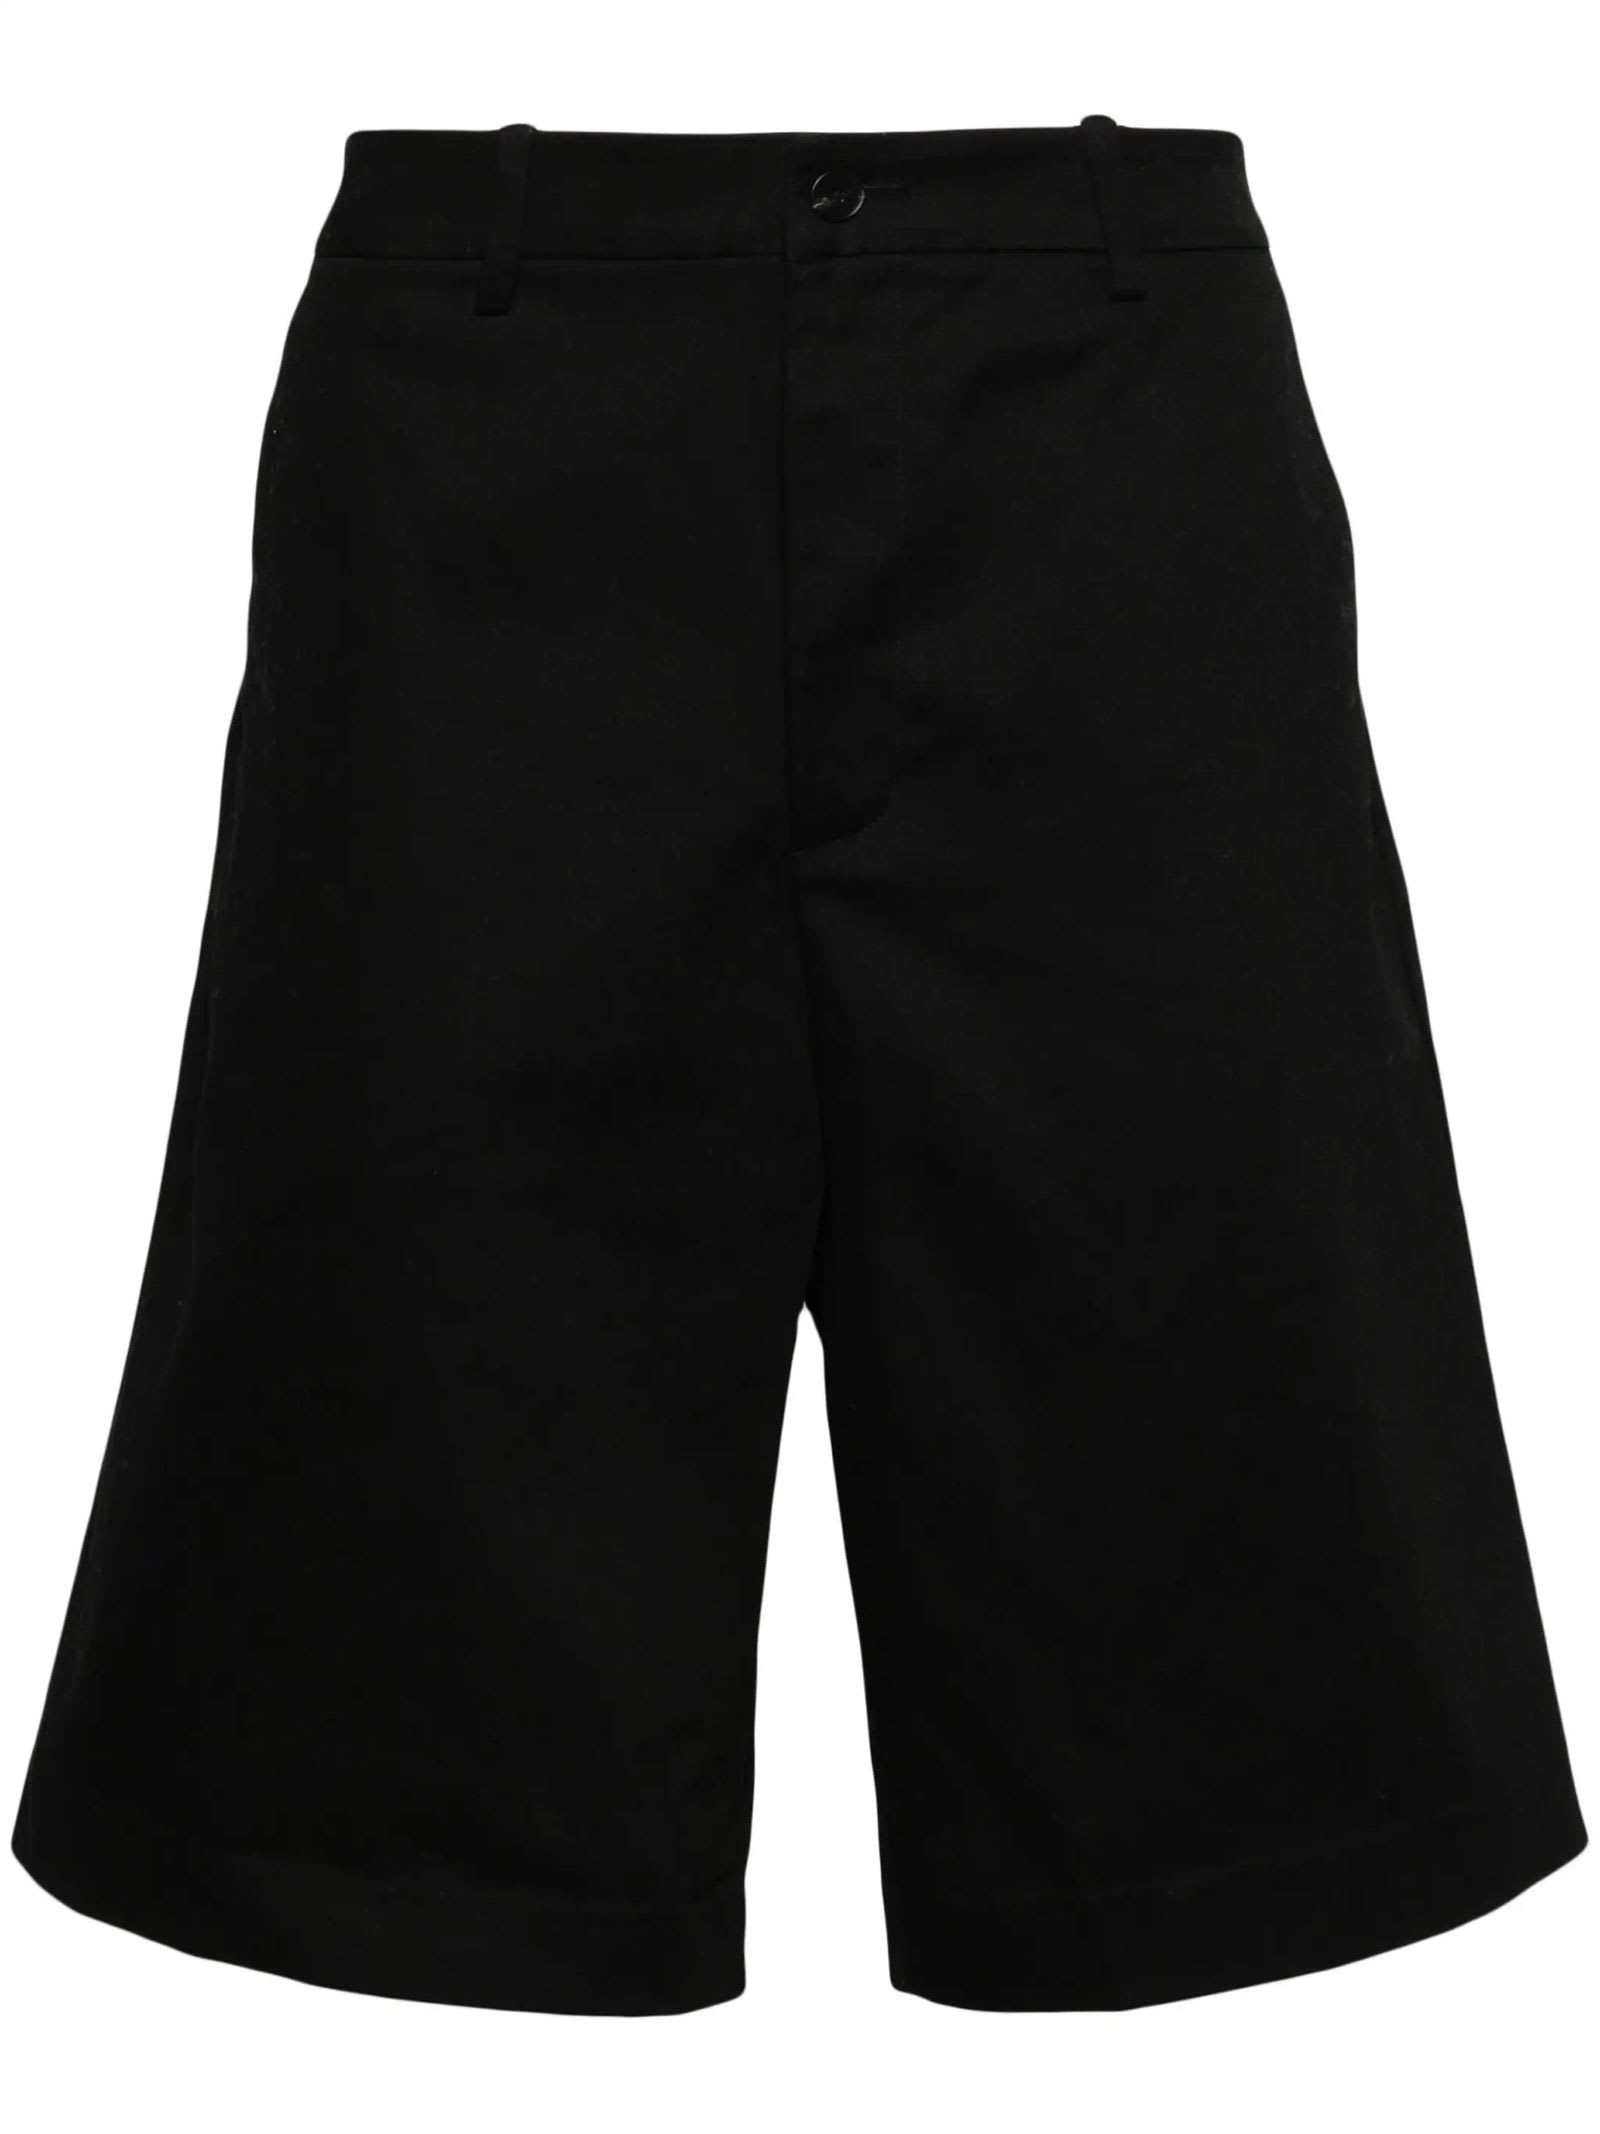 Shop Axel Arigato Shorts Black